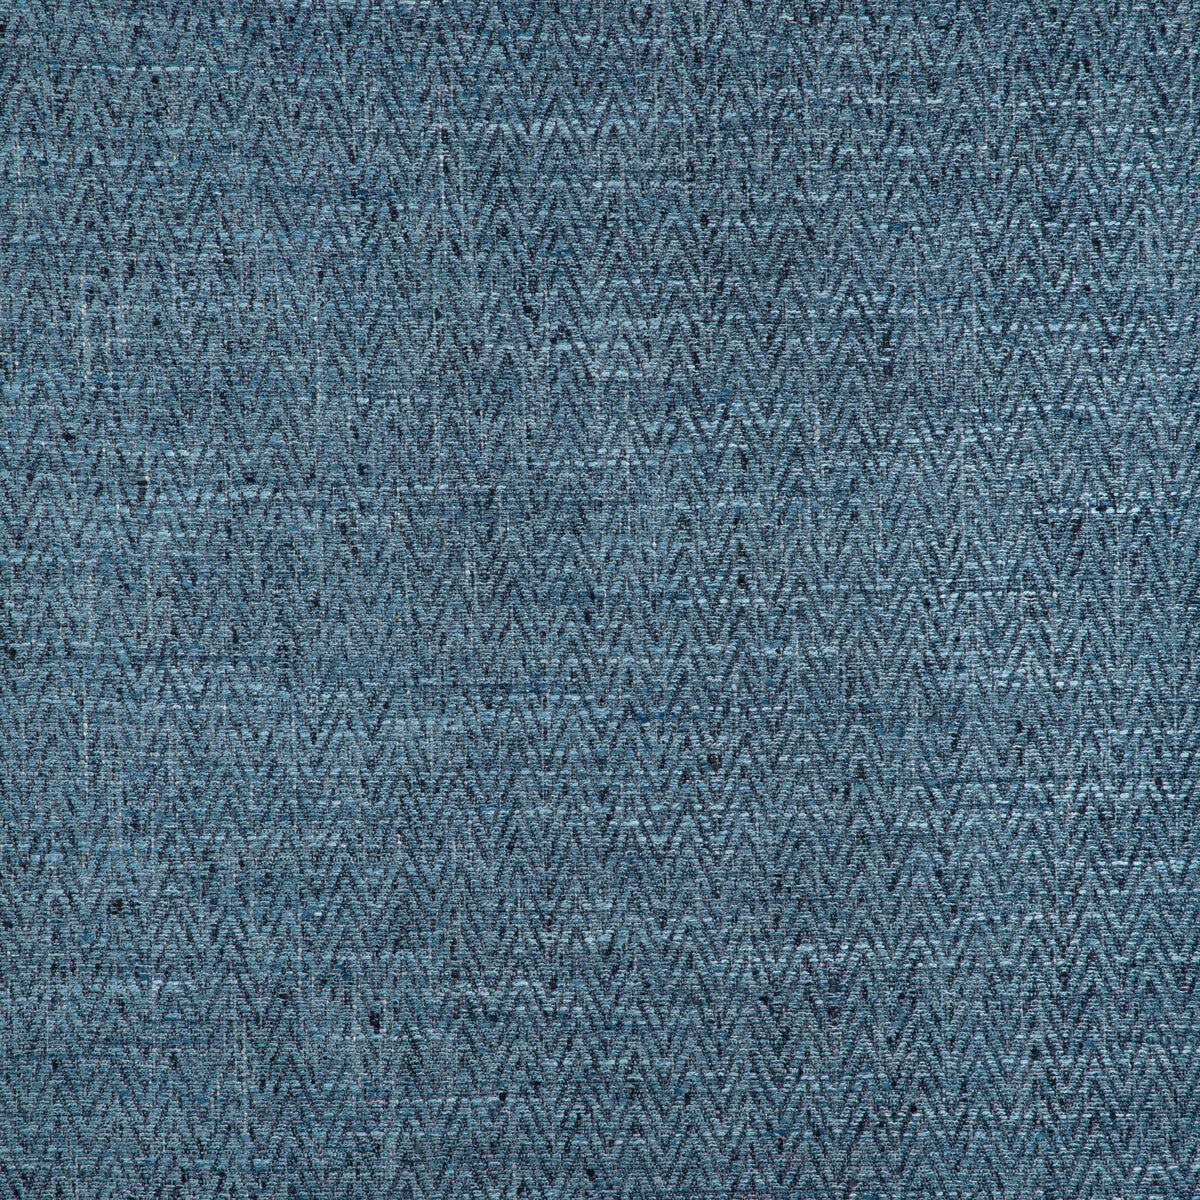 Kravet Smart fabric in 34092-550 color - pattern 34092.550.0 - by Kravet Smart